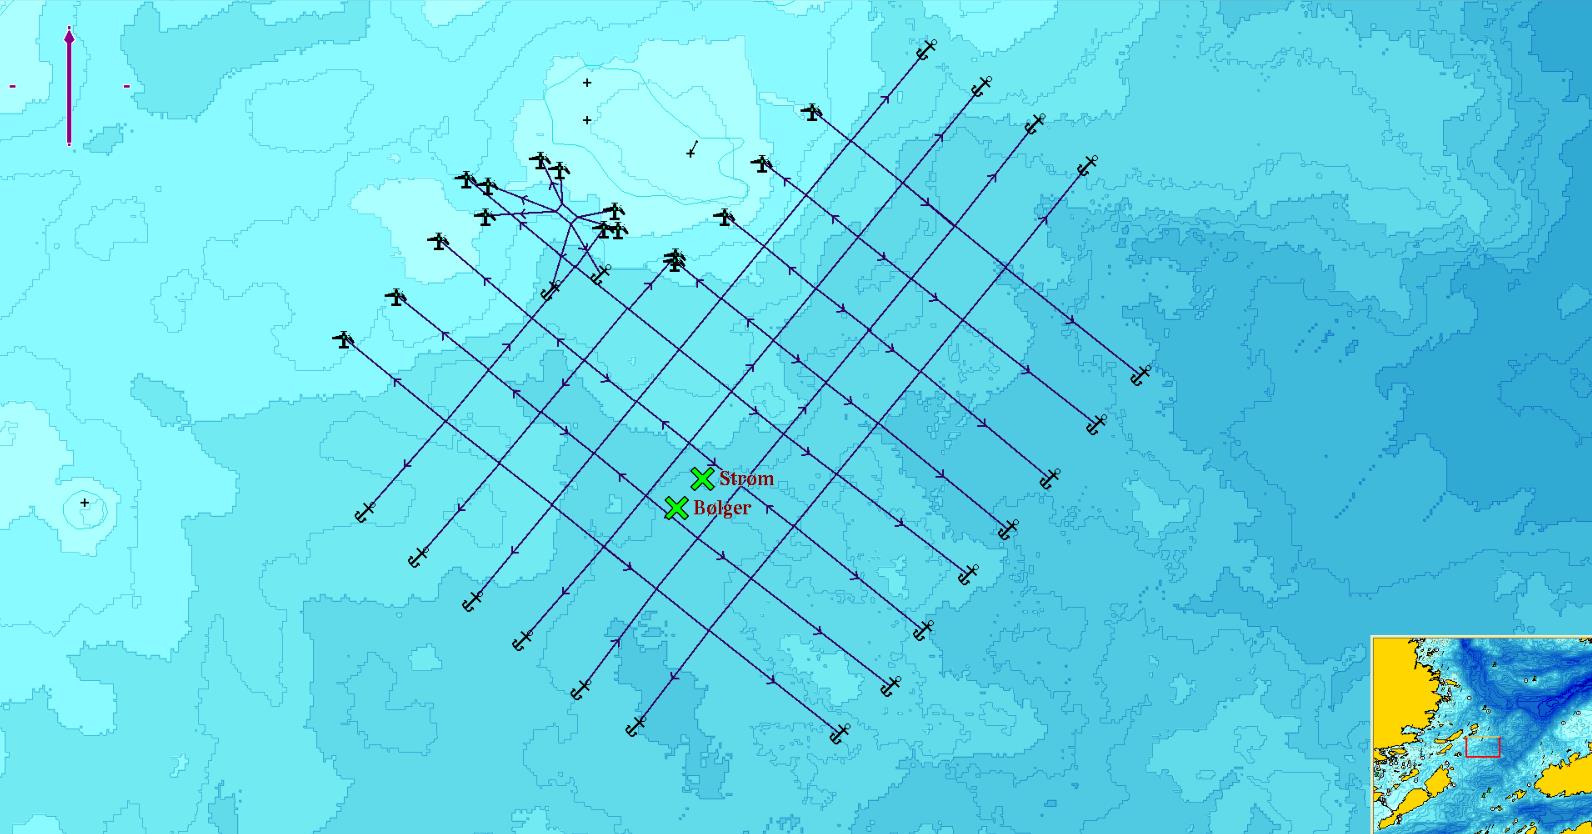 Figur 2.1.2: Planlagt lokalitet med anleggsramme og fortøyninger til matfiskanlegg og flåte ved Nørholmen. I nordvest ses Smøla. Kartkilde: Olex. Figur 2.1.3: Planlagt anleggsramme og flåte med fortøyninger ved Nørholmen, med måleposisjon for strøm- og bølgemåling.